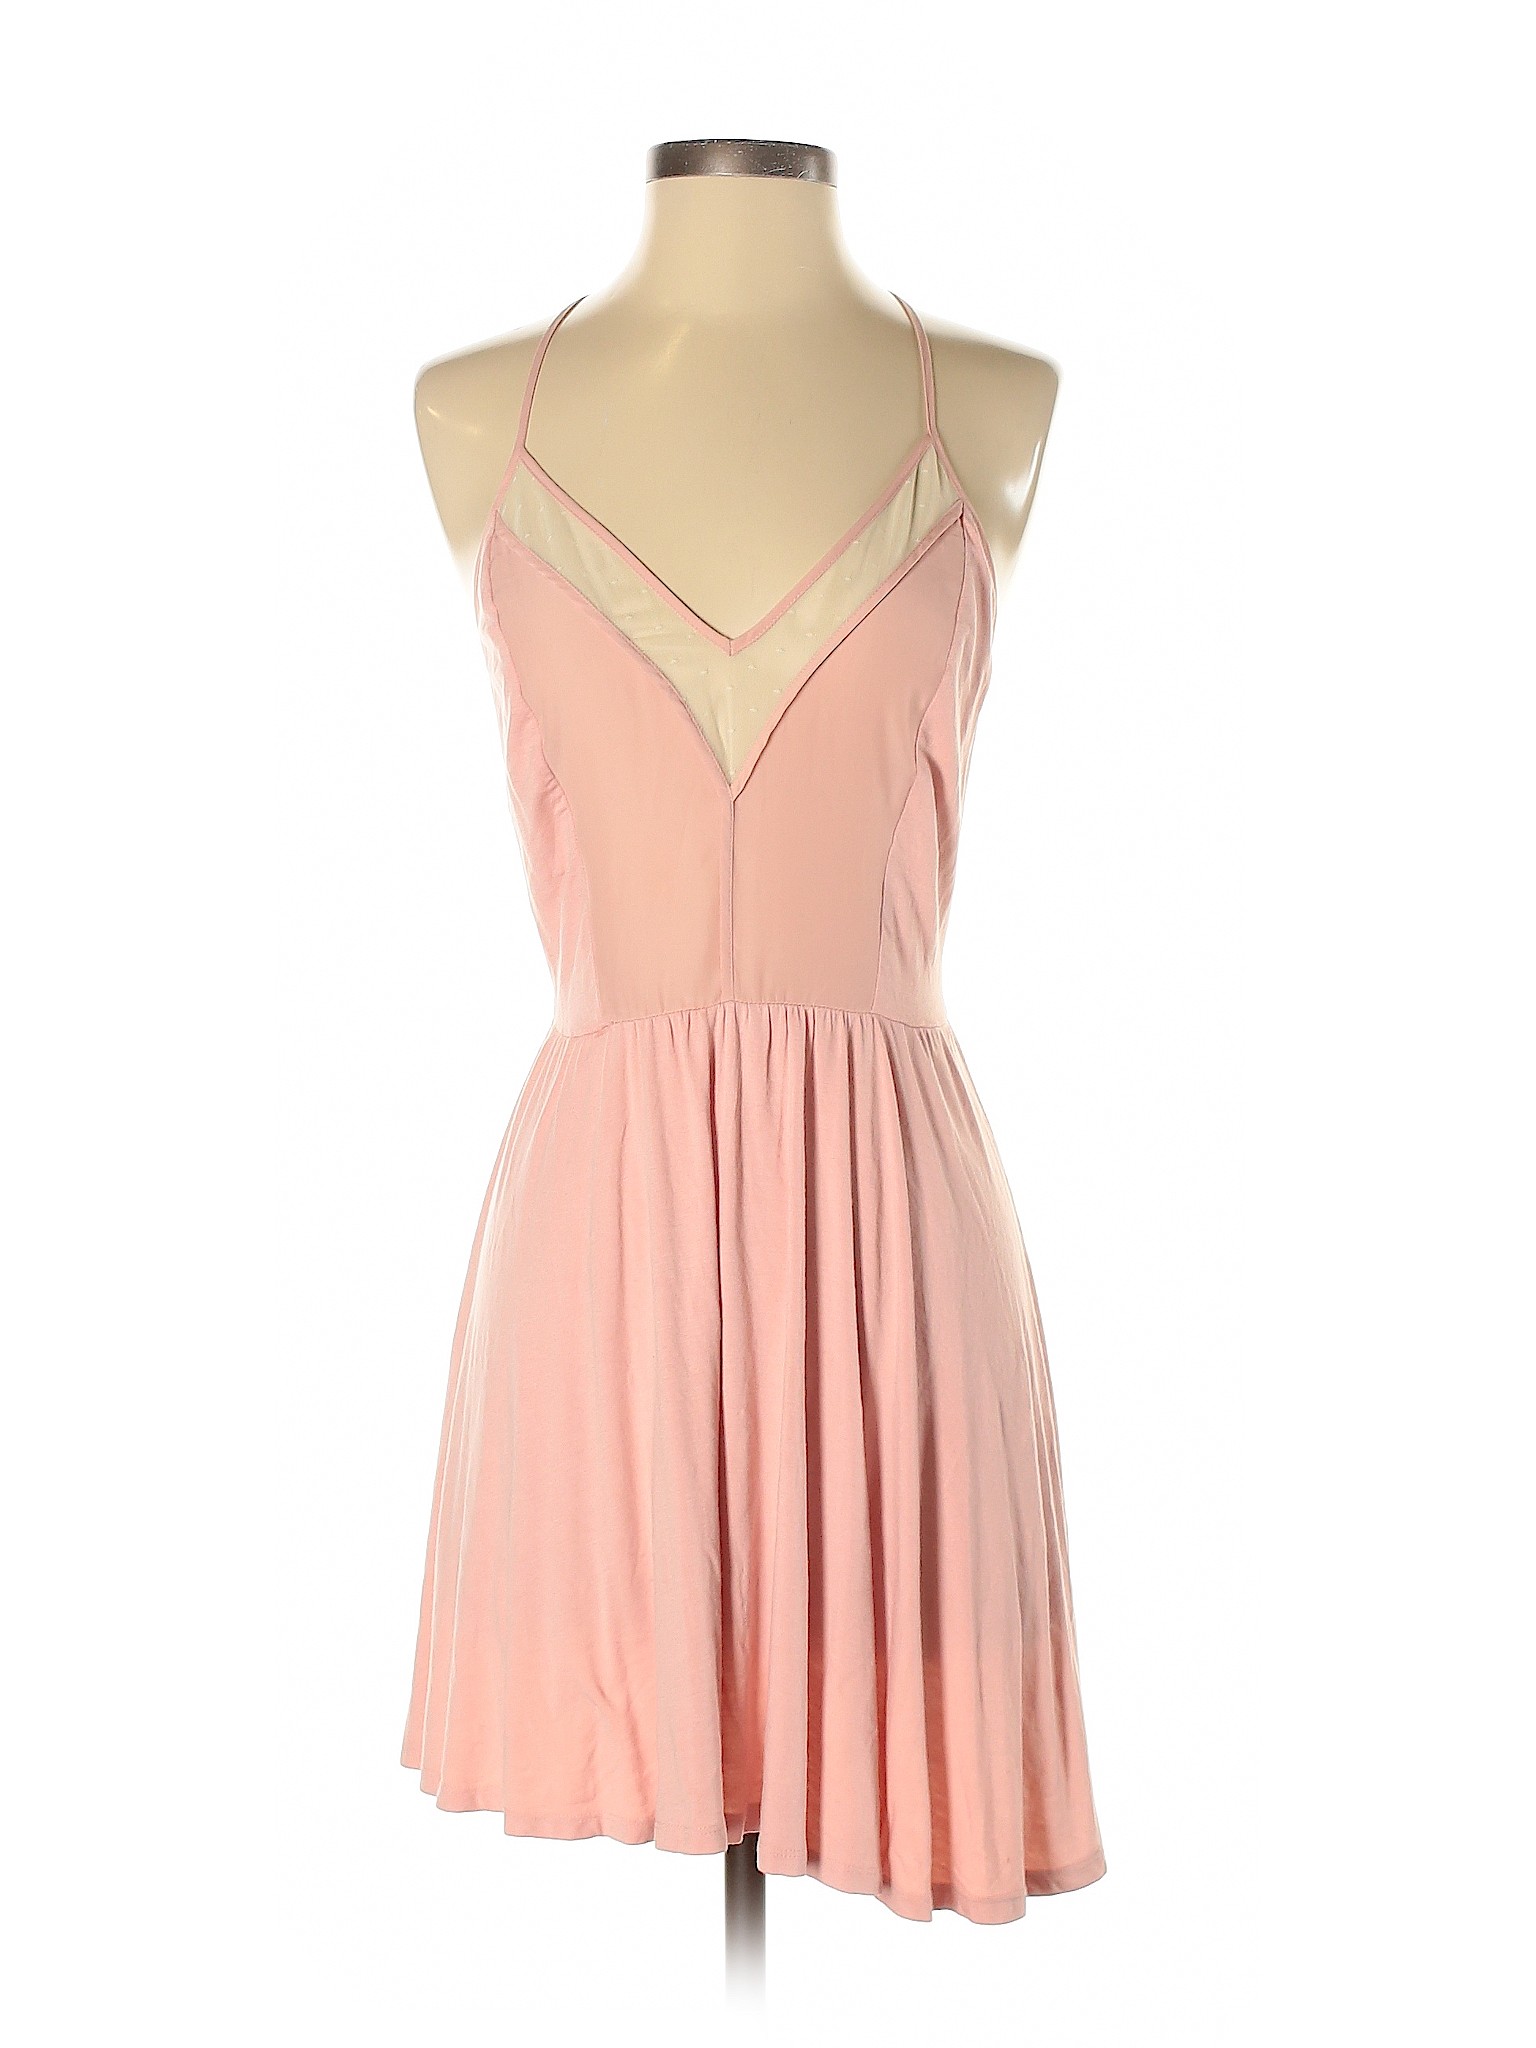 Cope Women Pink Casual Dress S | eBay